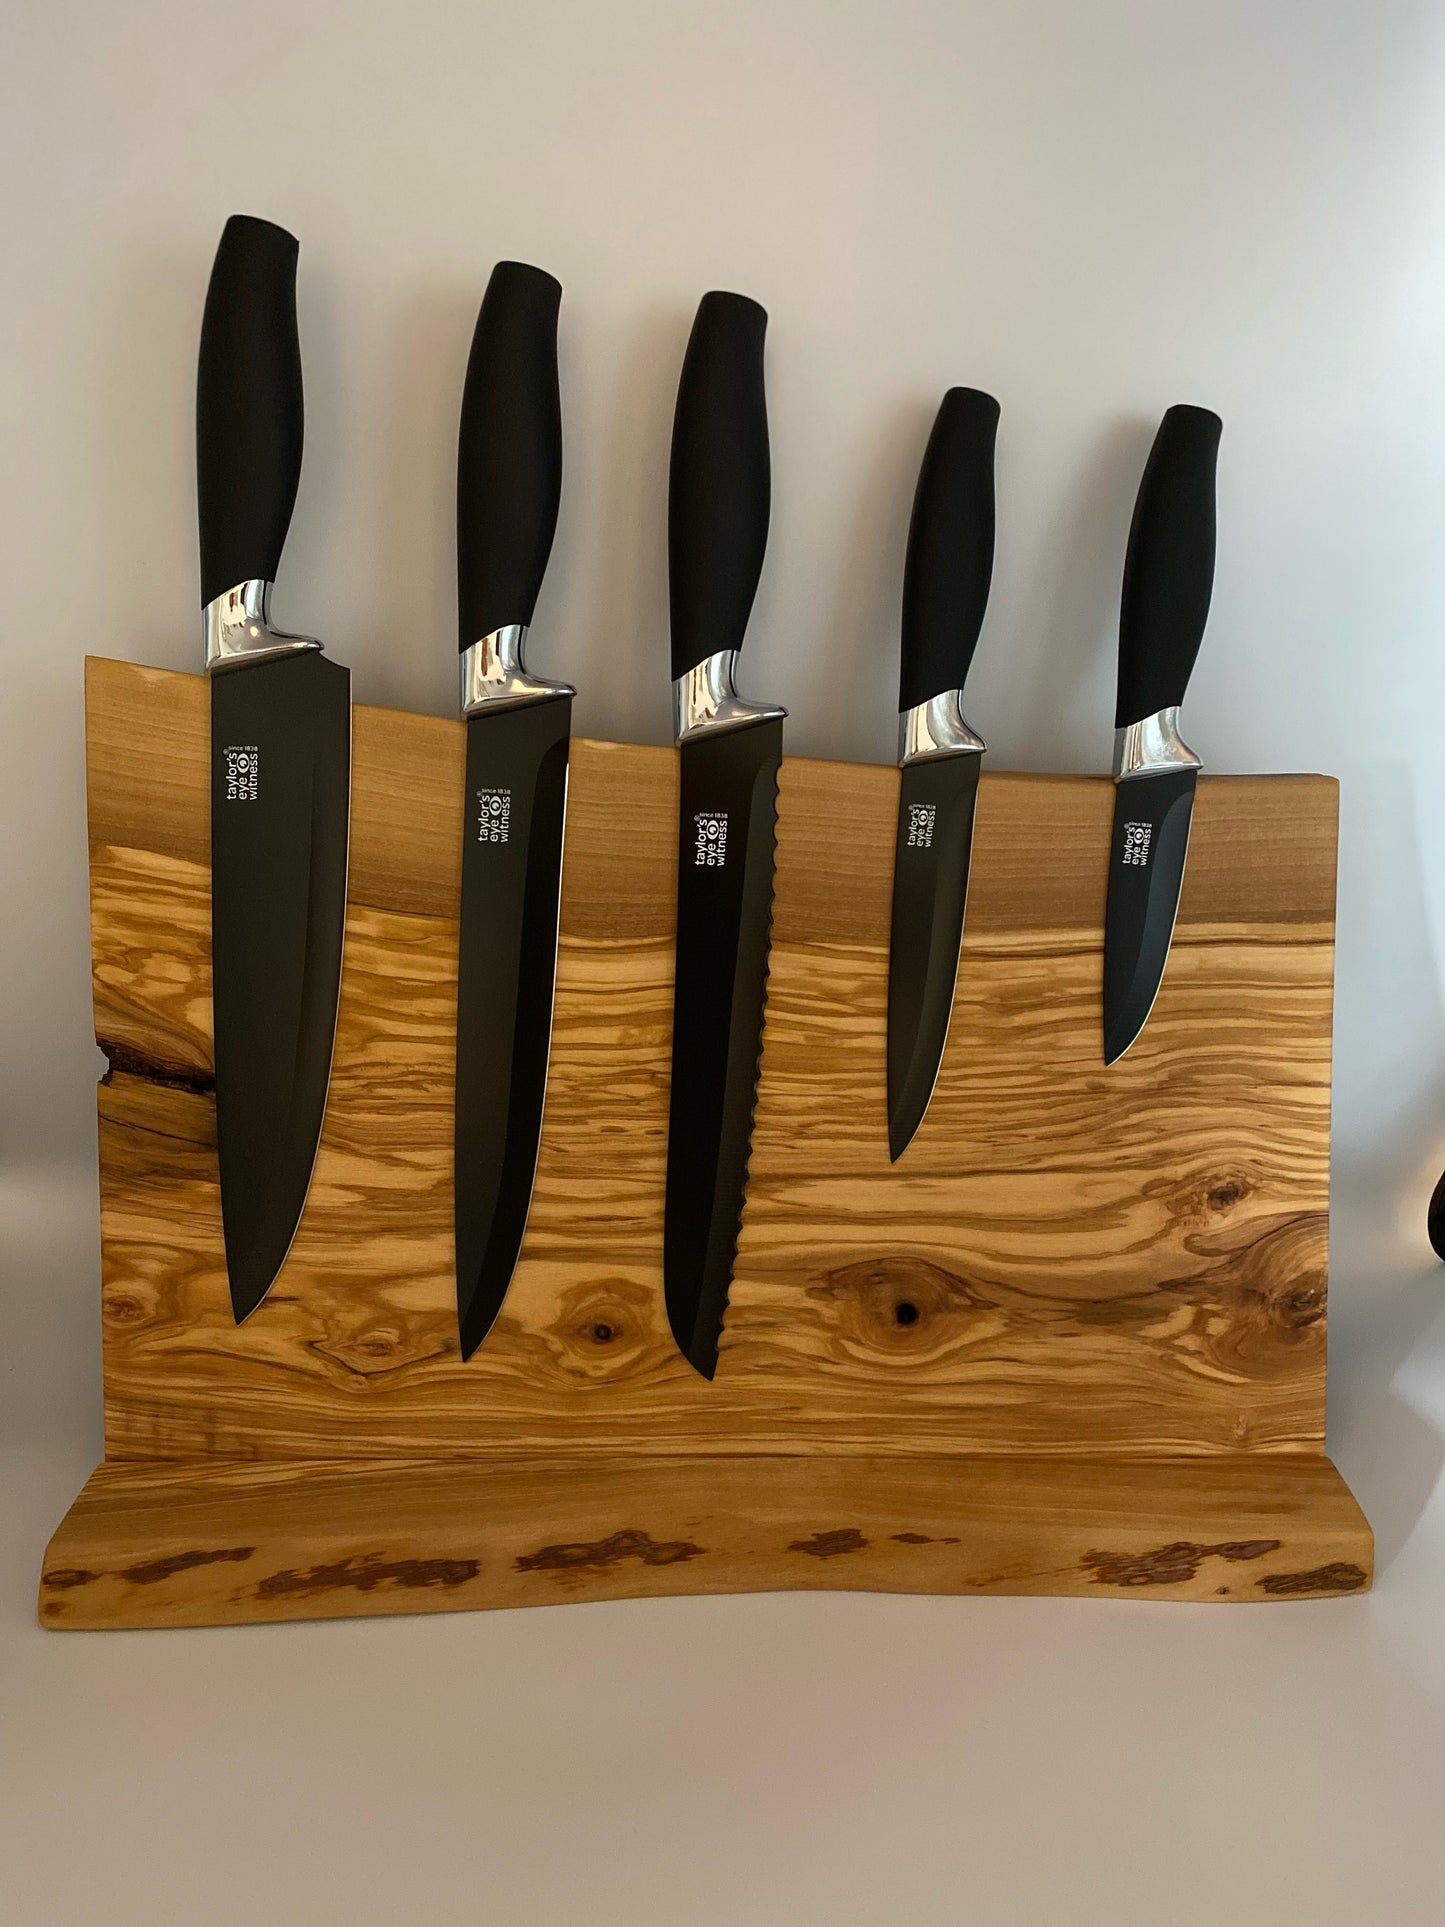 Customized Countertop Knife Blocks - Build Your Own Block